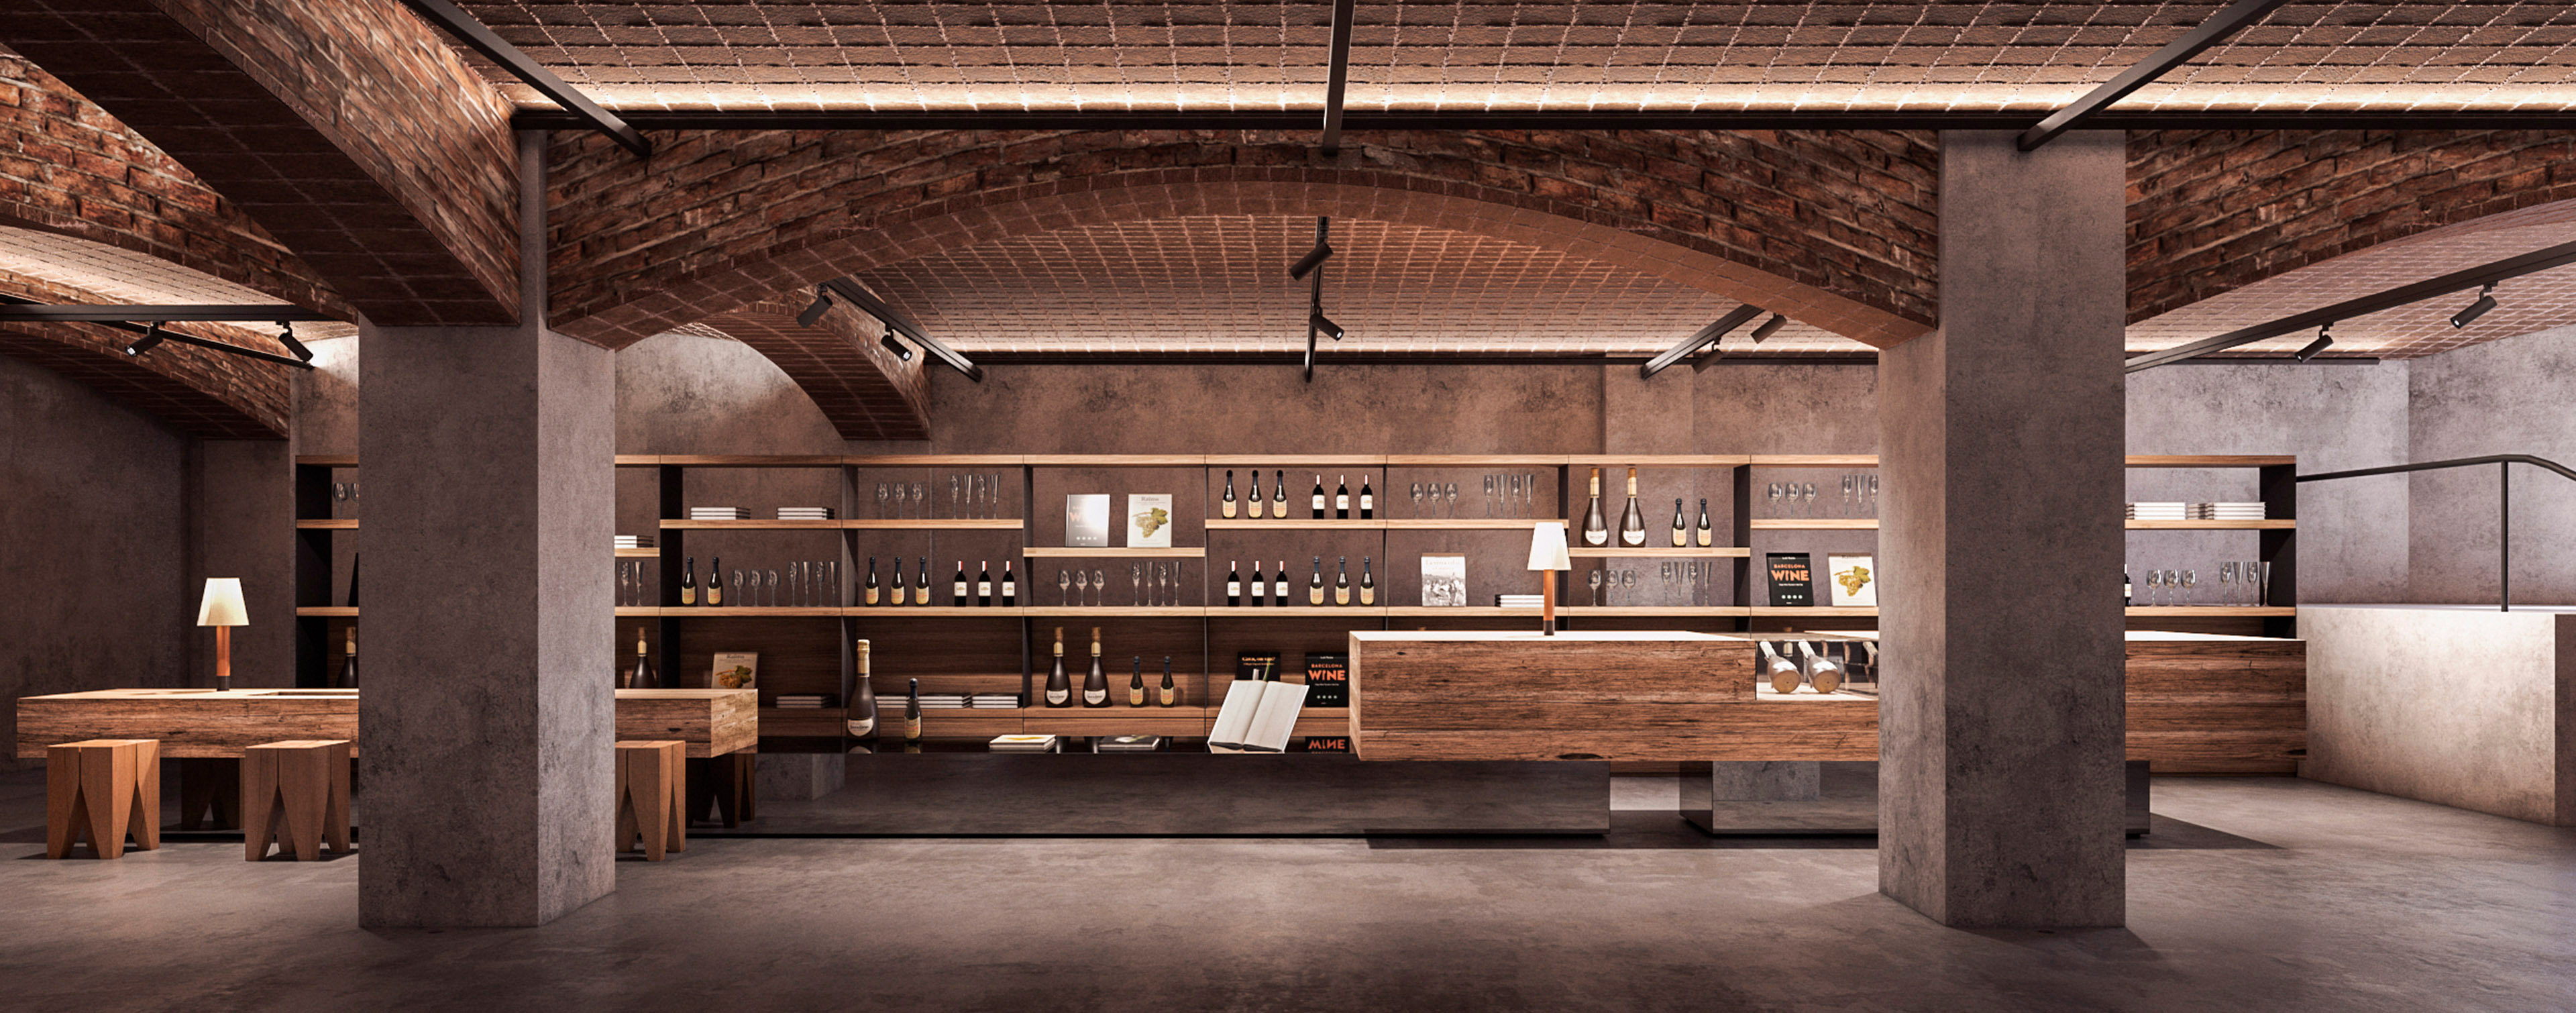 luv studio luxury architects santsadurni juve y camps winery IMG 01 - LUV Studio - Architecture & Design - Barcelona